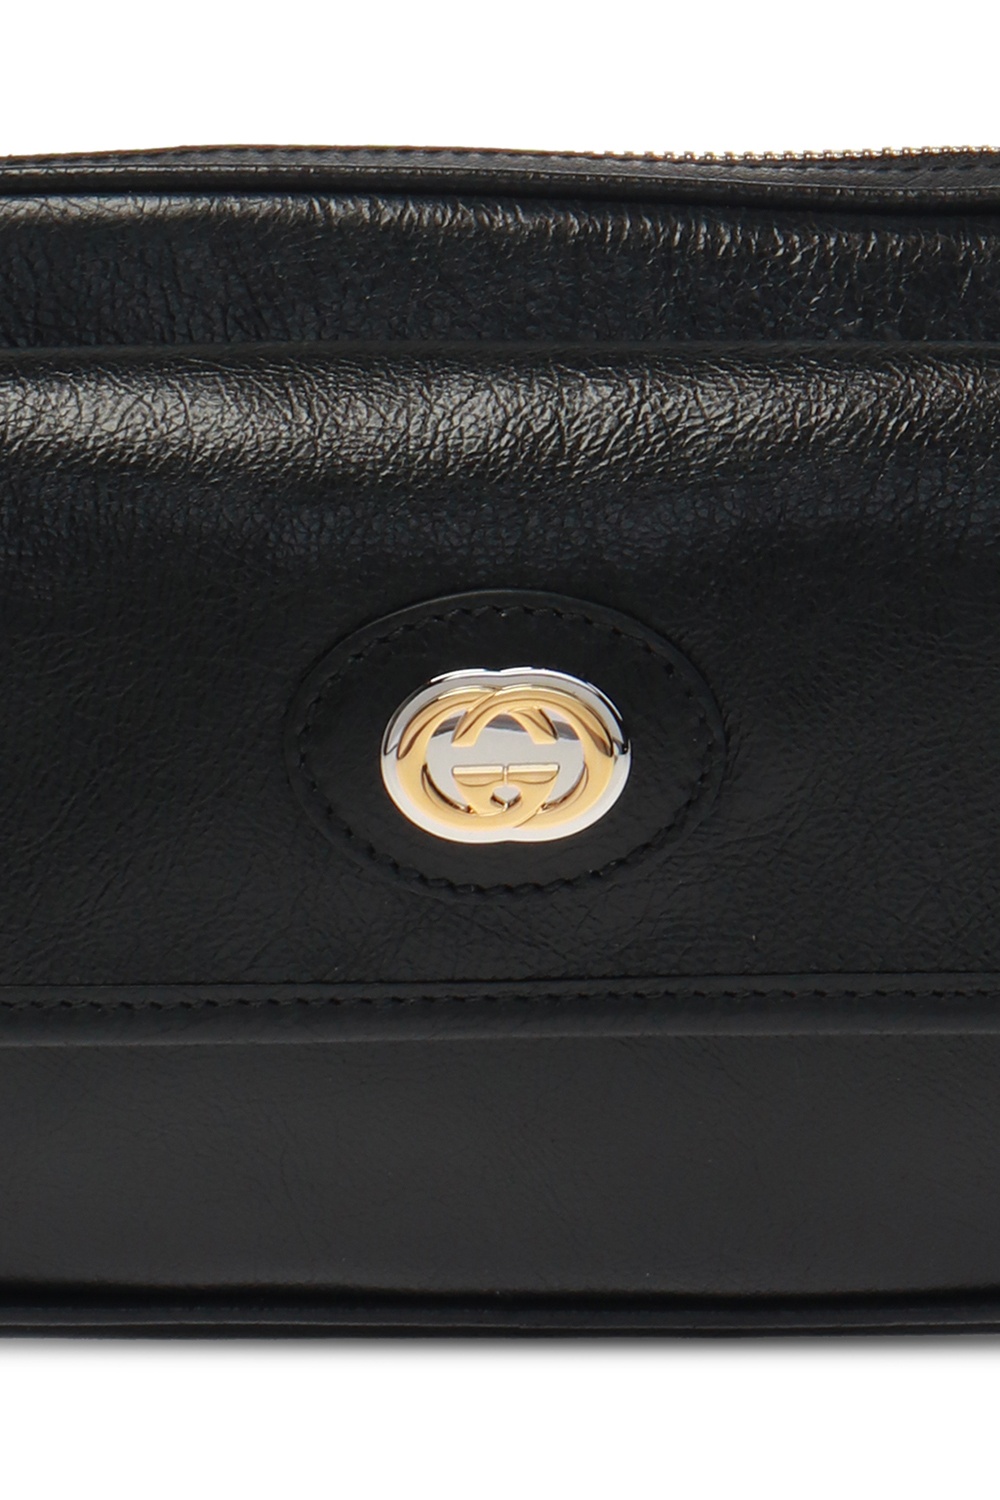 Gucci GG Logo Belt Bag, Brand Size 90 598080 1GZ0X 9022 - Handbags -  Jomashop